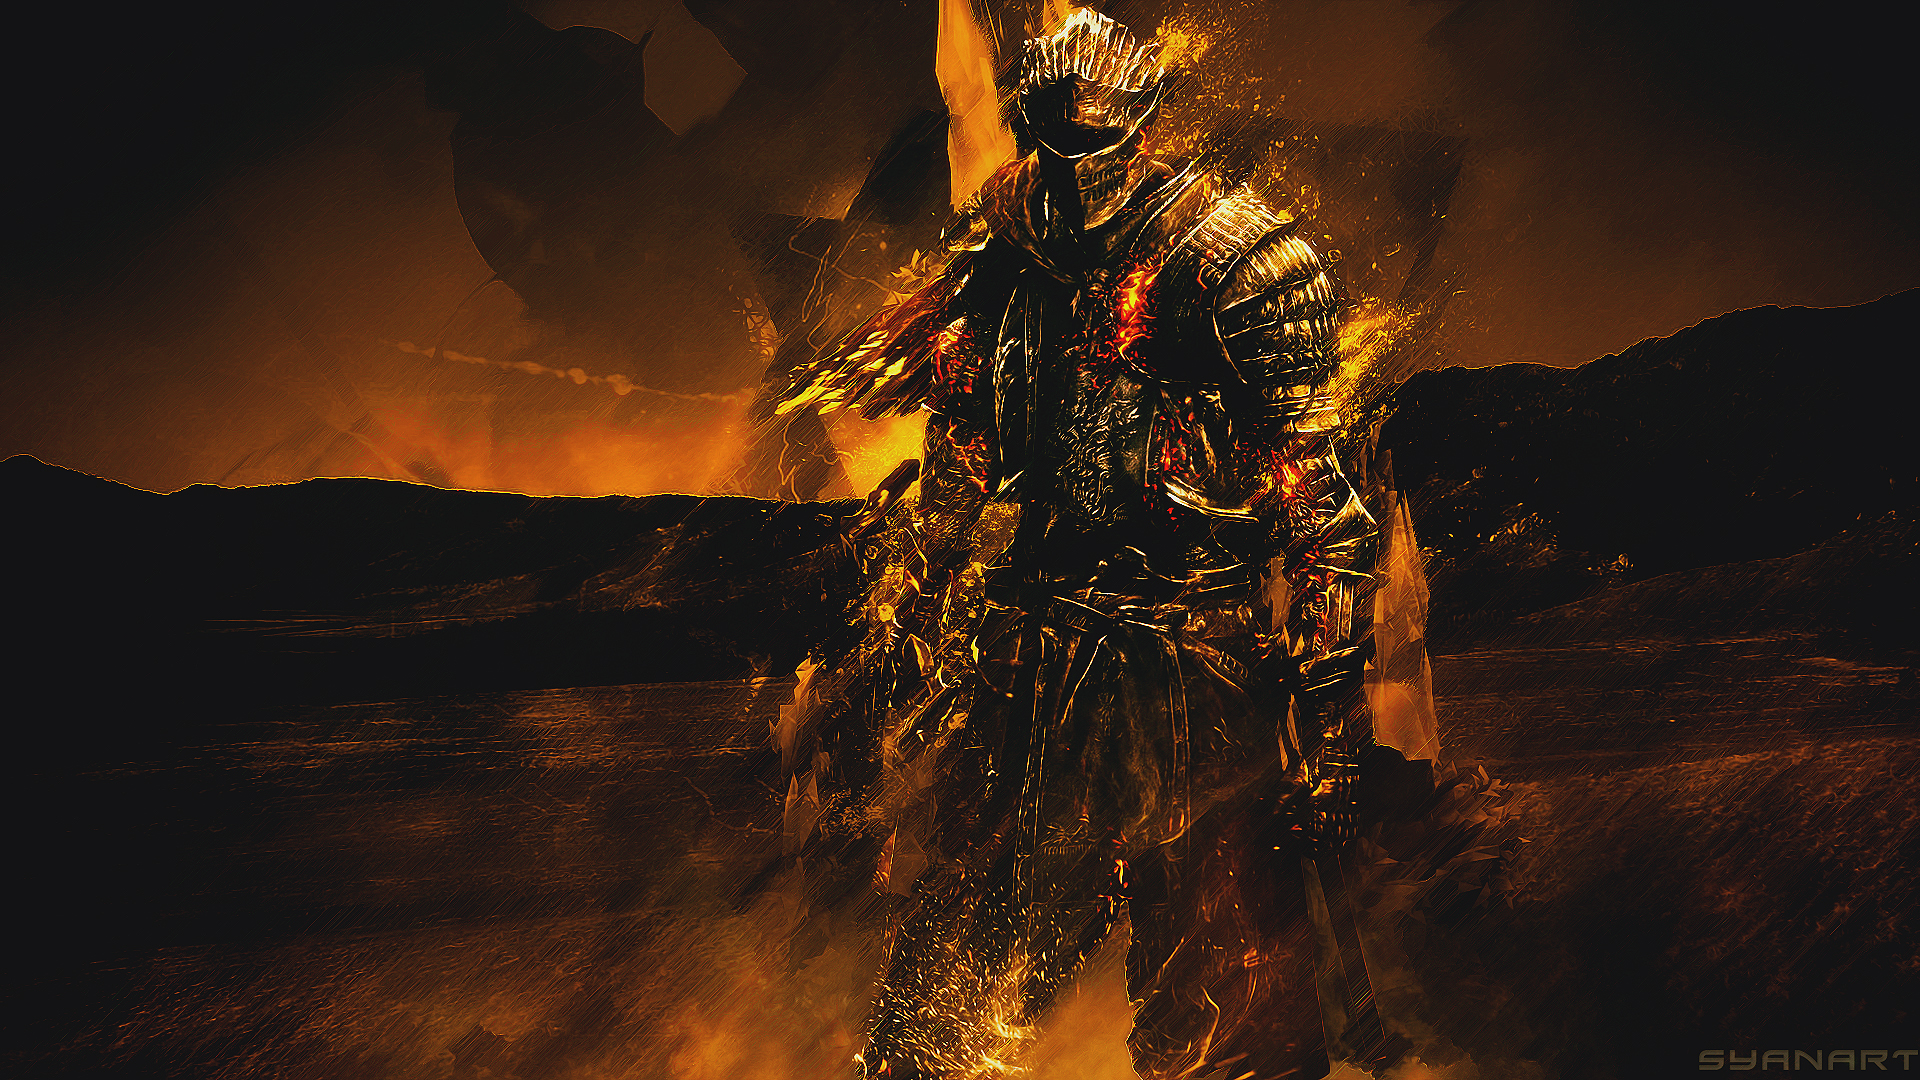 Video Game Darksiders III HD Wallpaper | Background Image